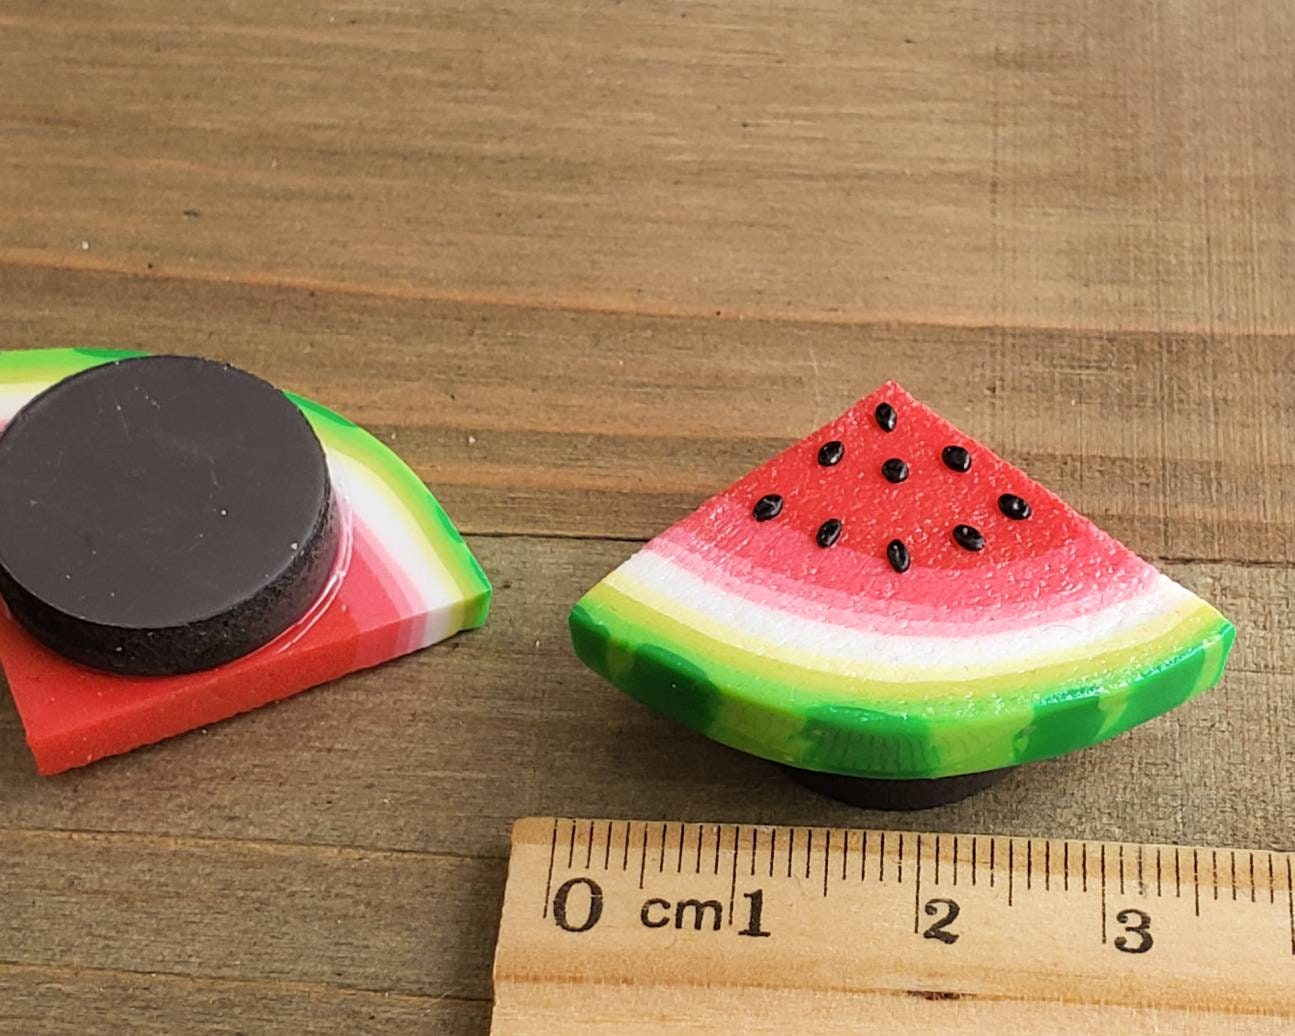 Watermelon Slice Magnet